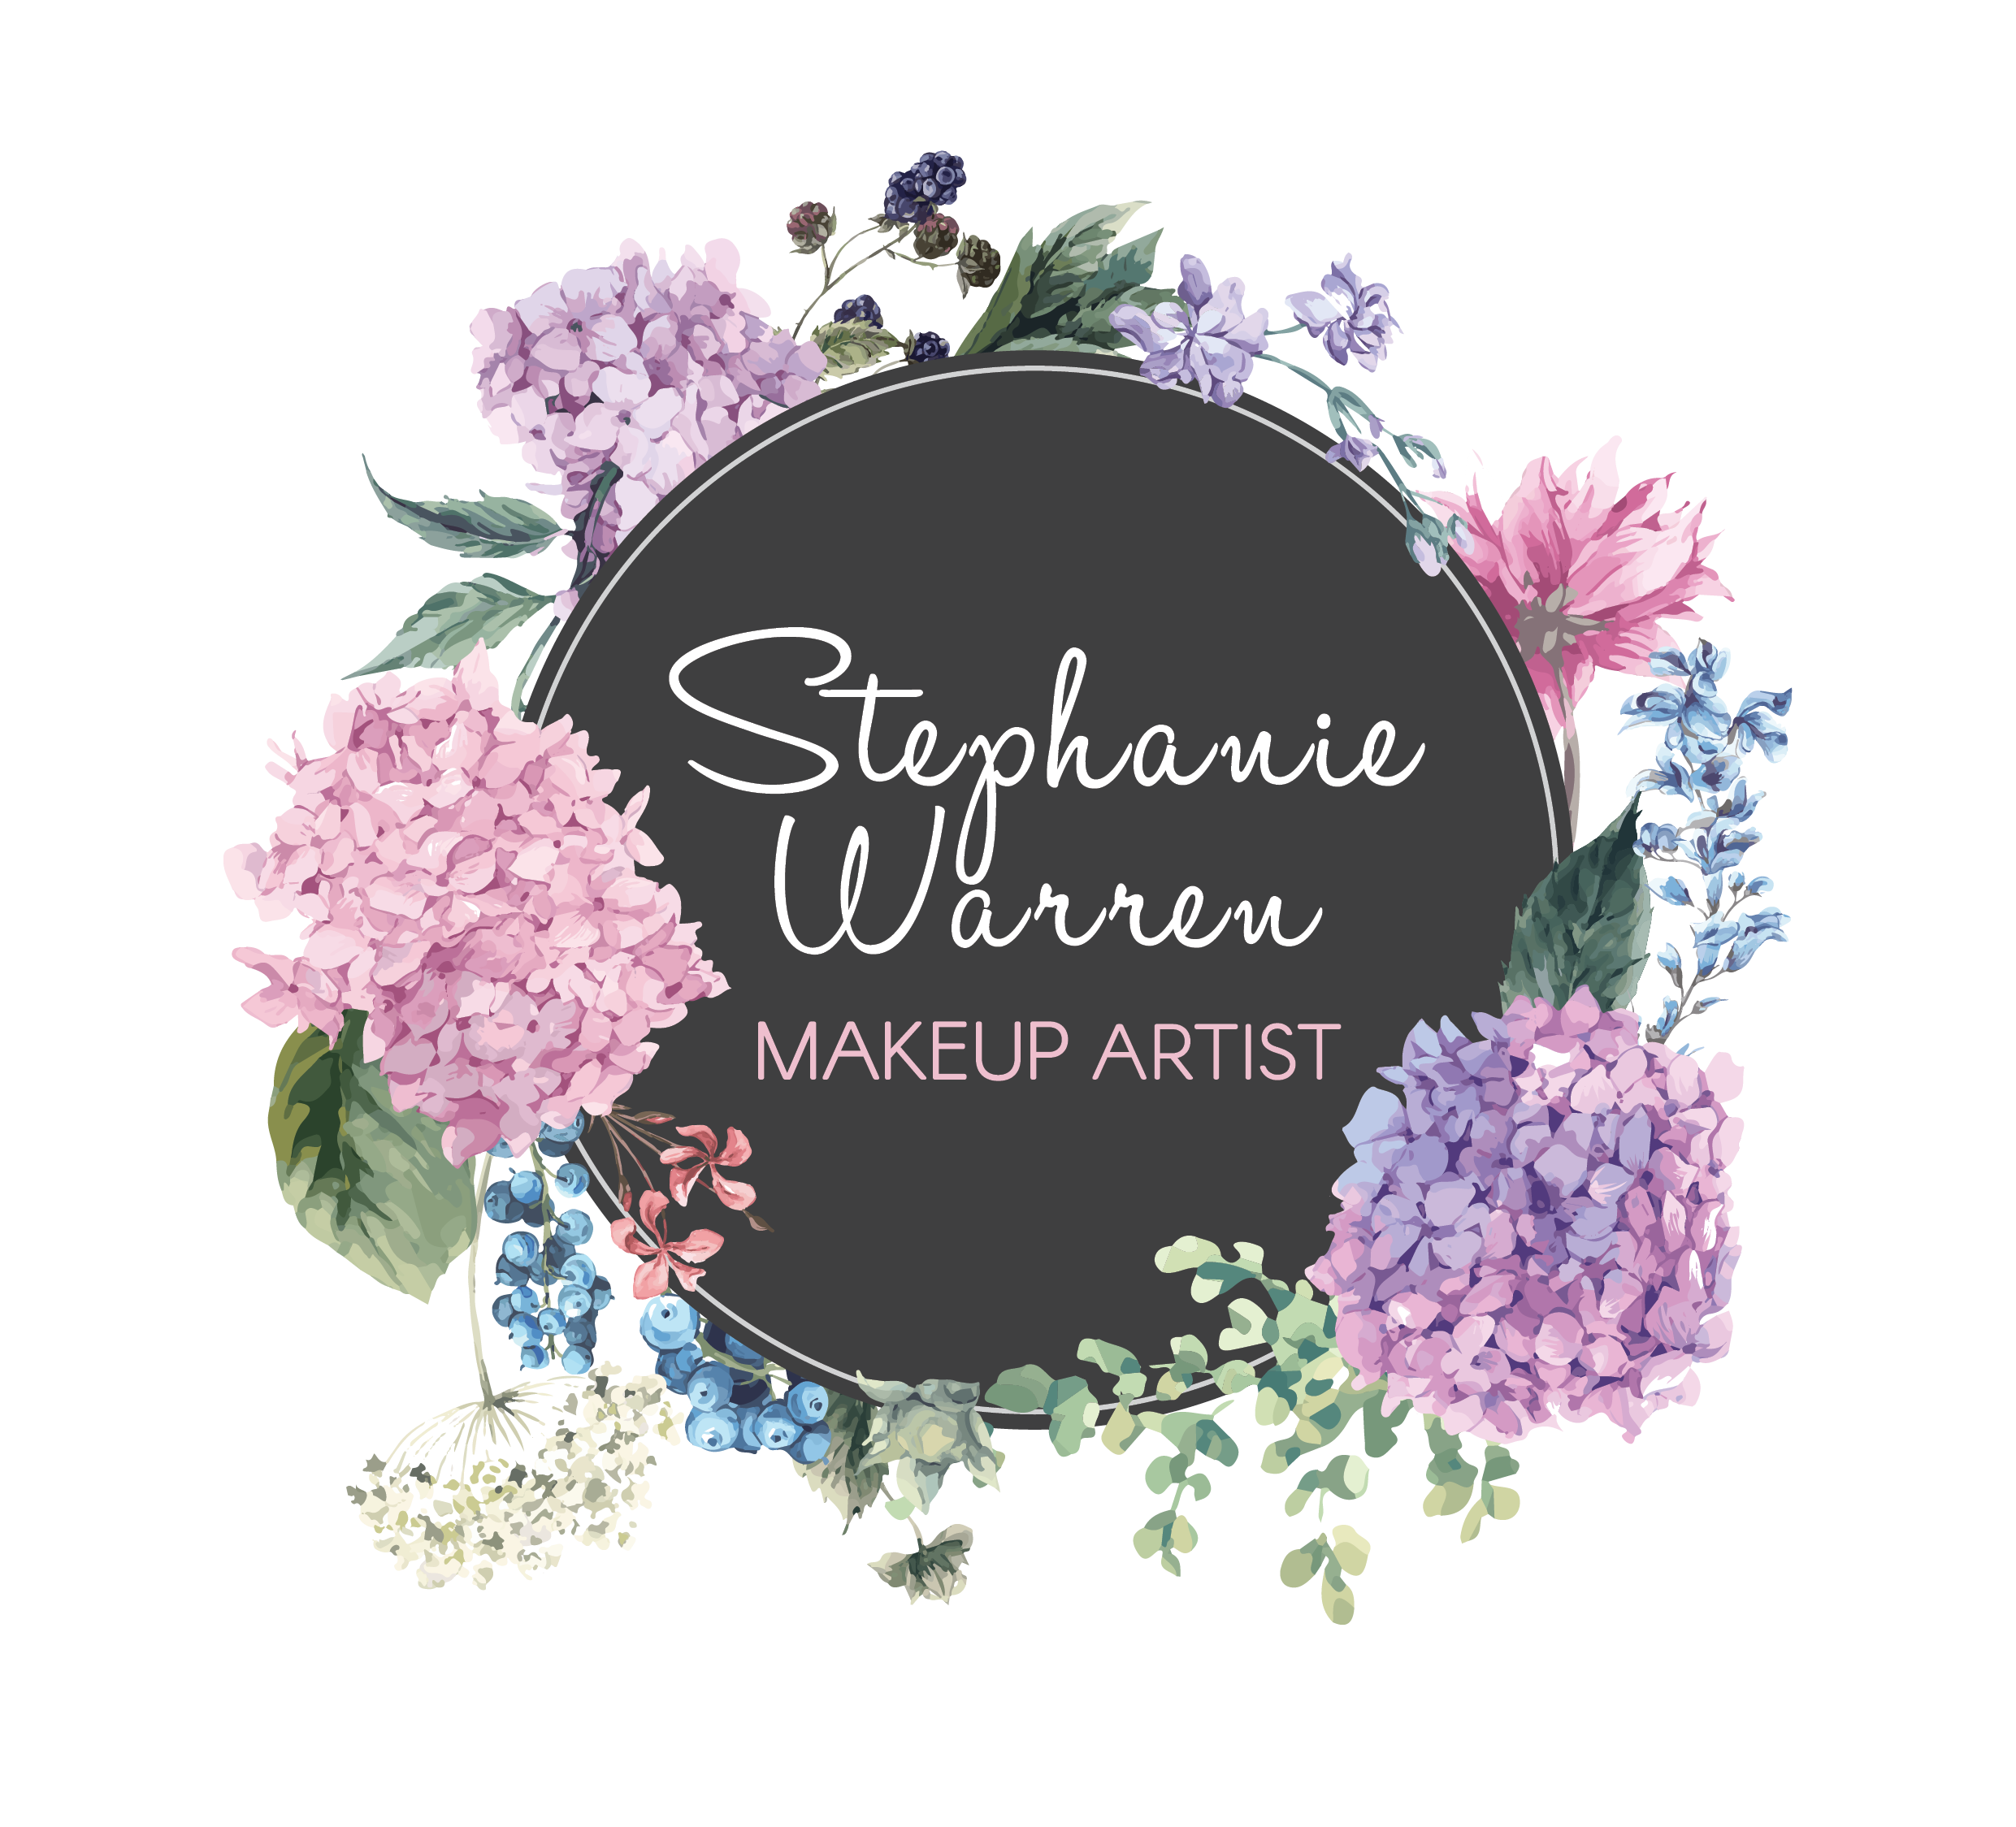 Stephanie Warren Makeup Artist - Wedding Makeup/Accredited Makeup Courses